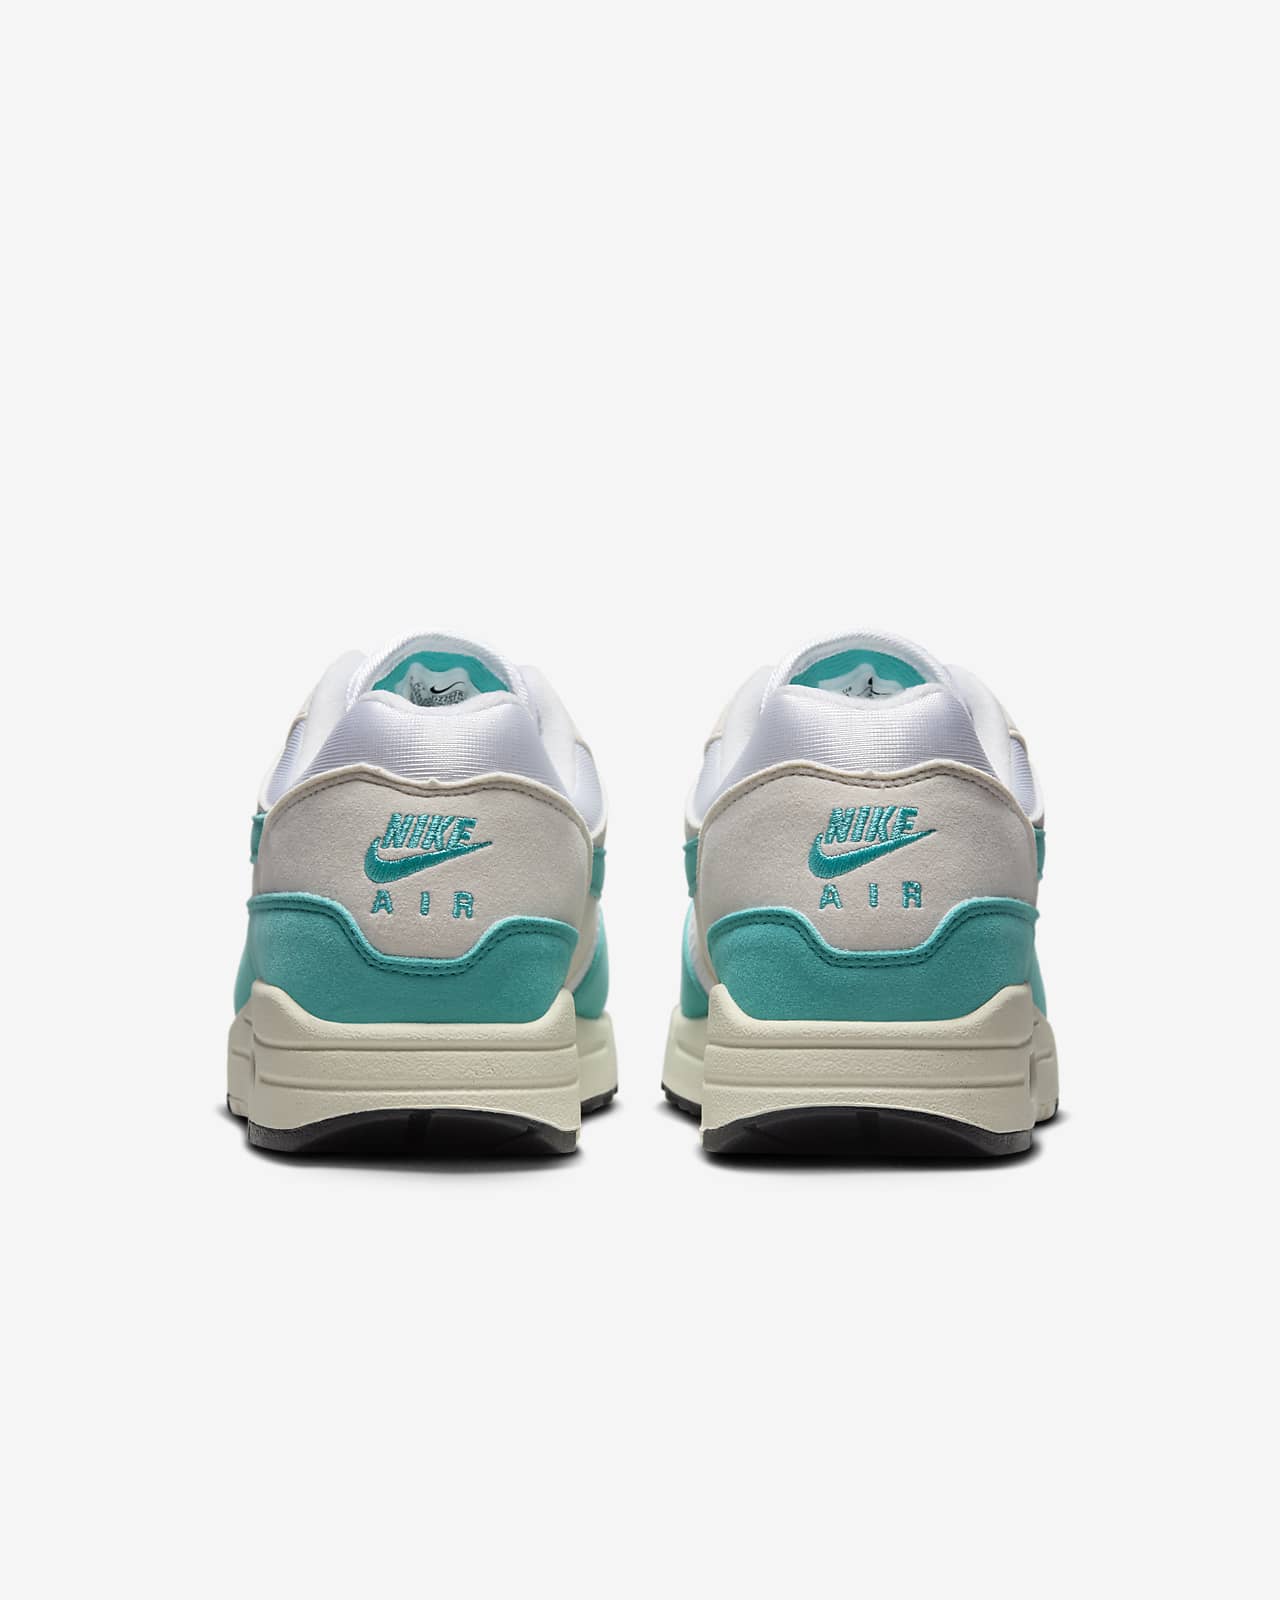 Nike Air Max 1 Women's Shoes